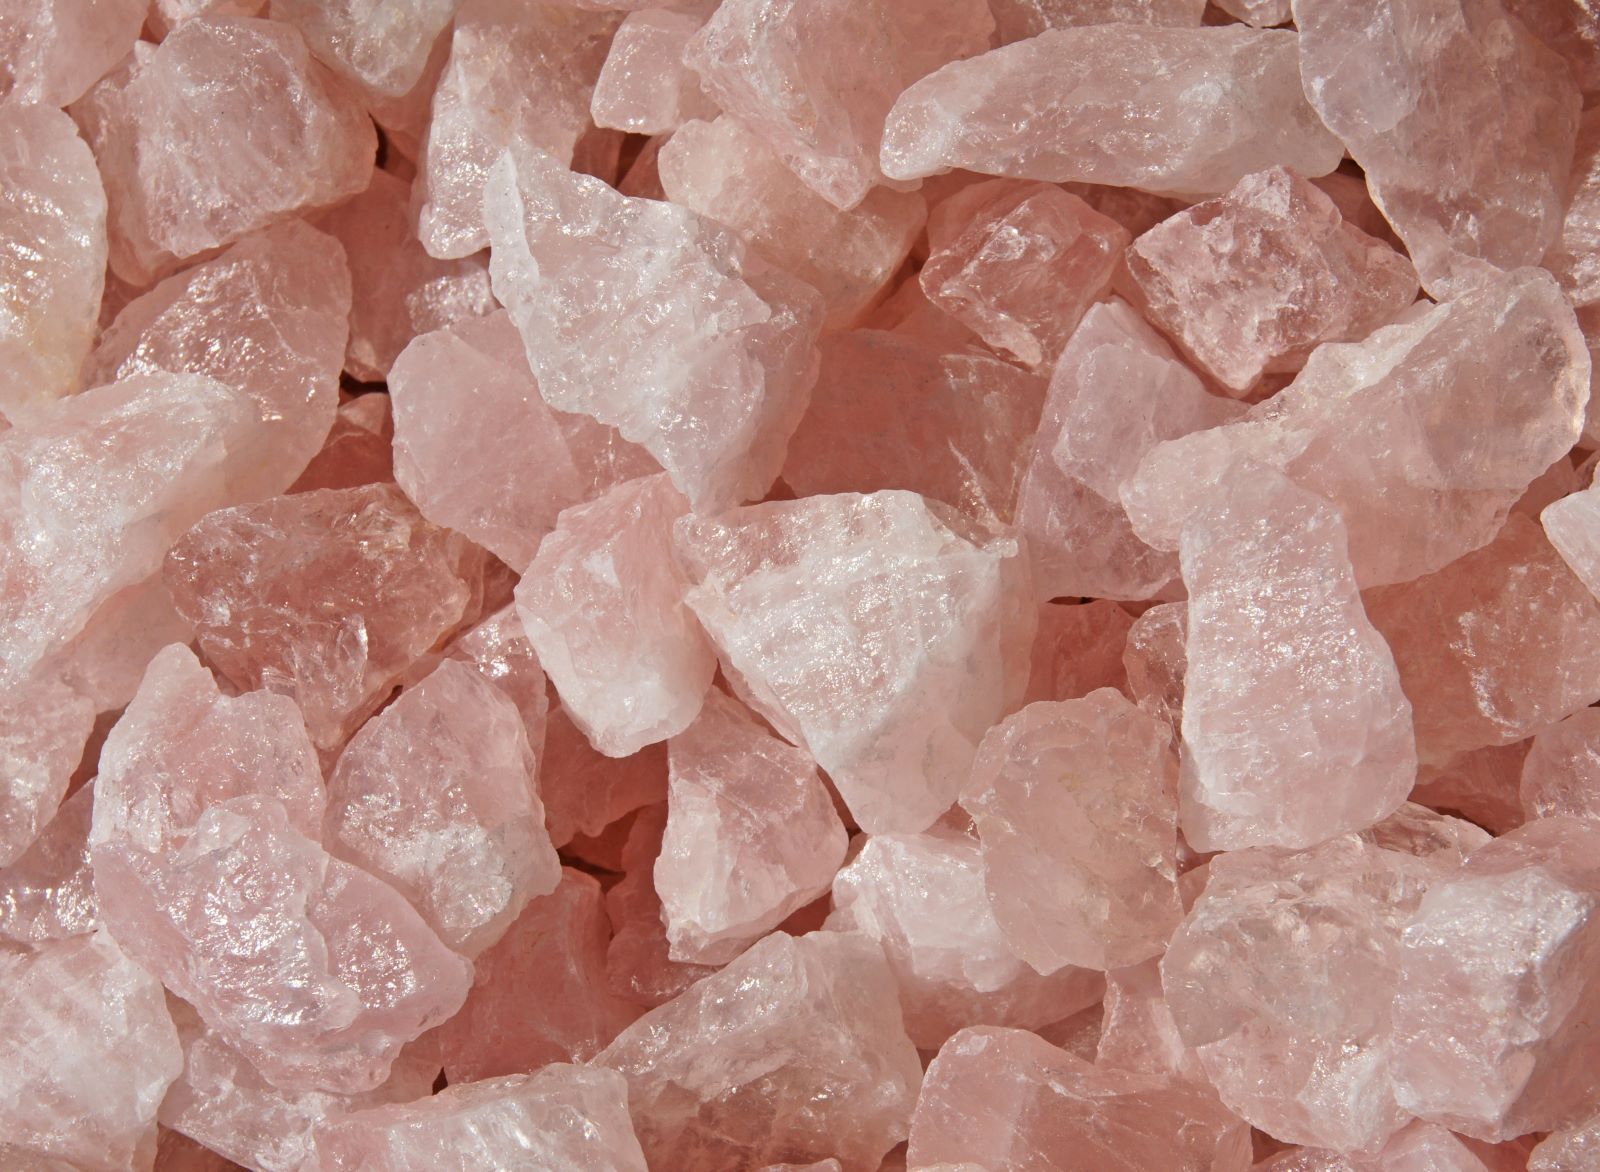 pink glass crystal meth